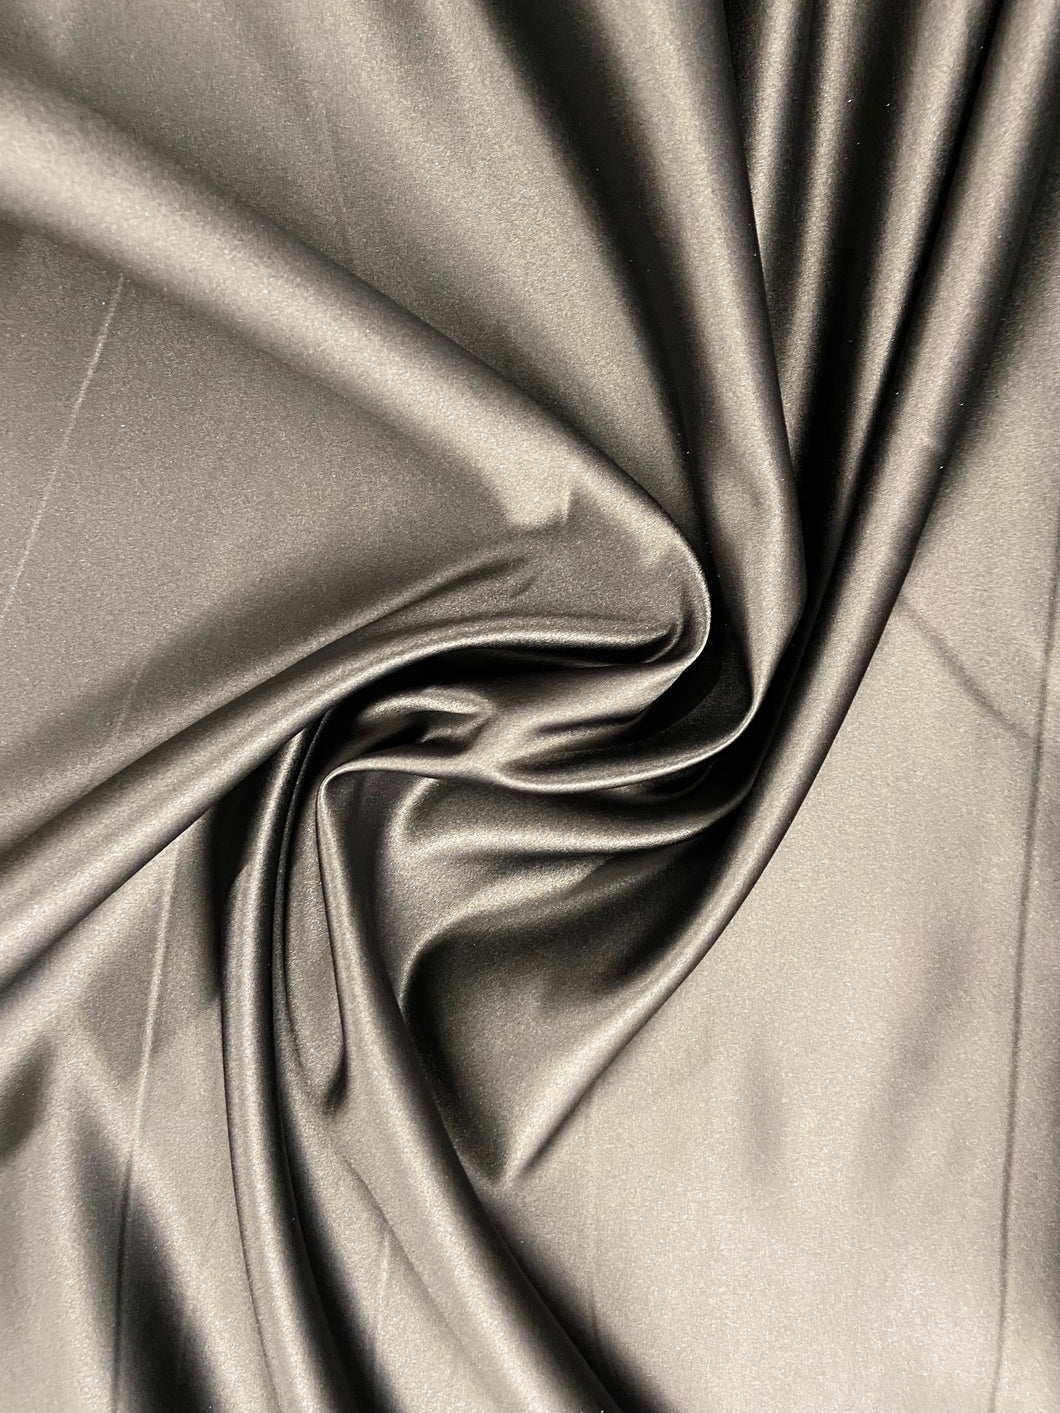 Duchess Satin Dress Making Fabric Shack Malmesbury Black